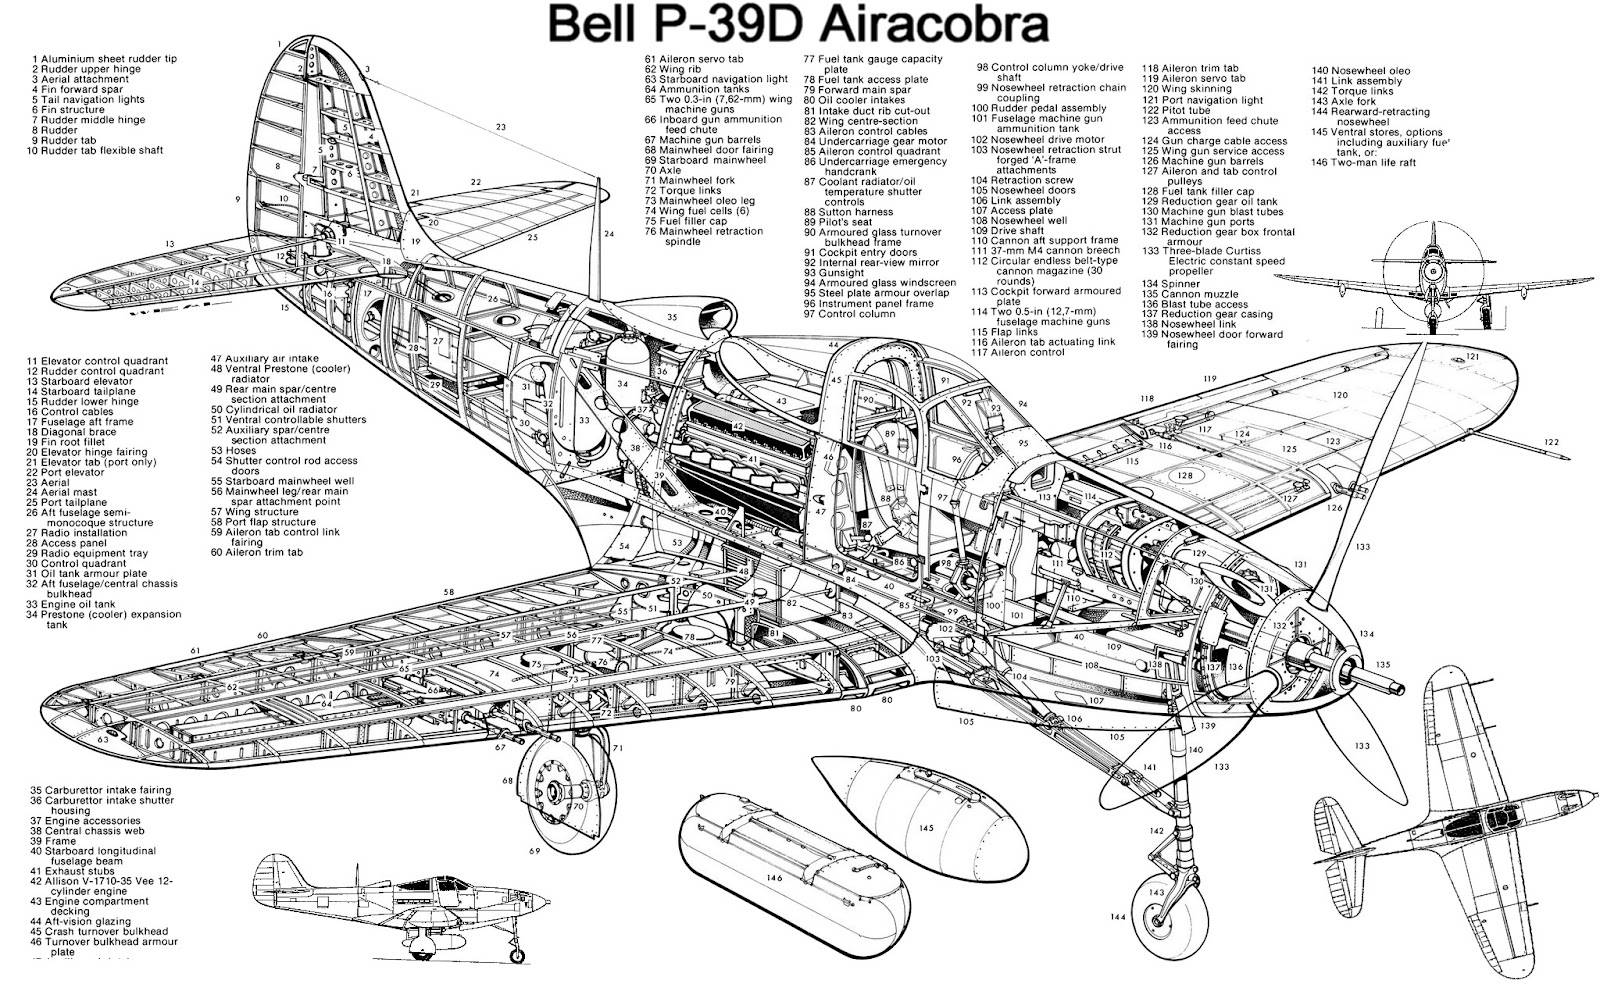 Bell p-39 airacobra — вики